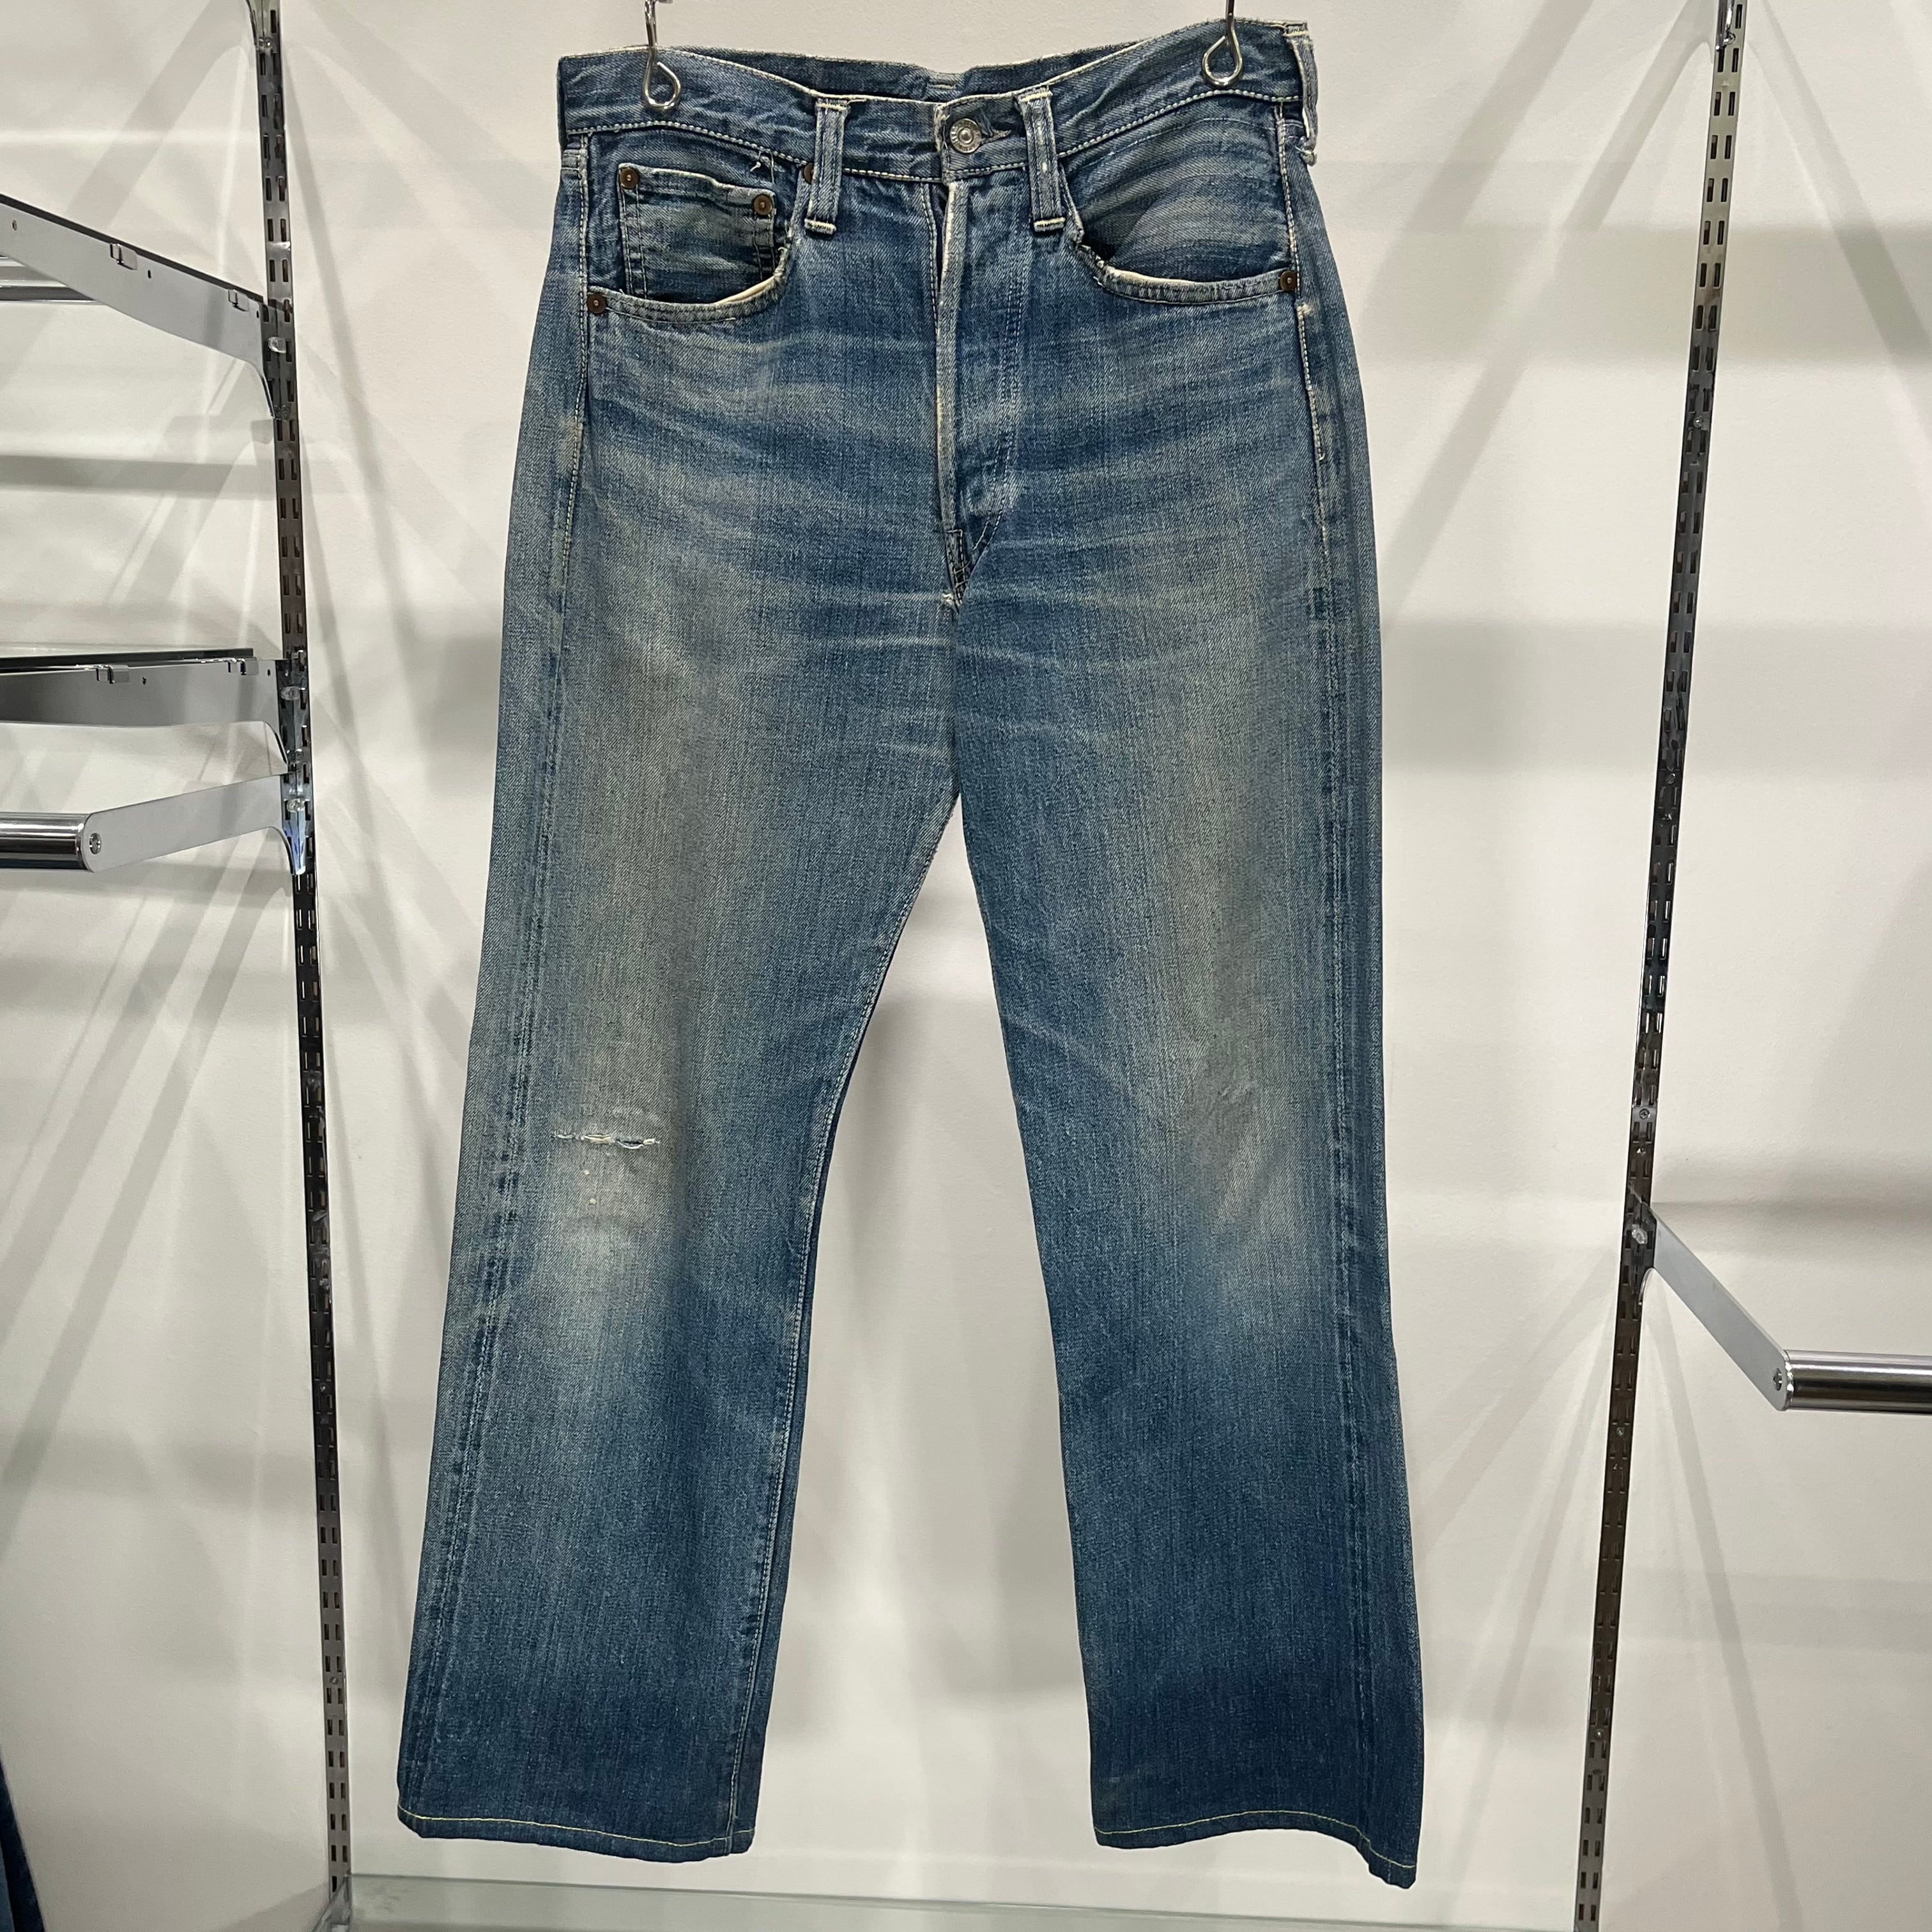 Leiv's denim jeans Lot S501XX